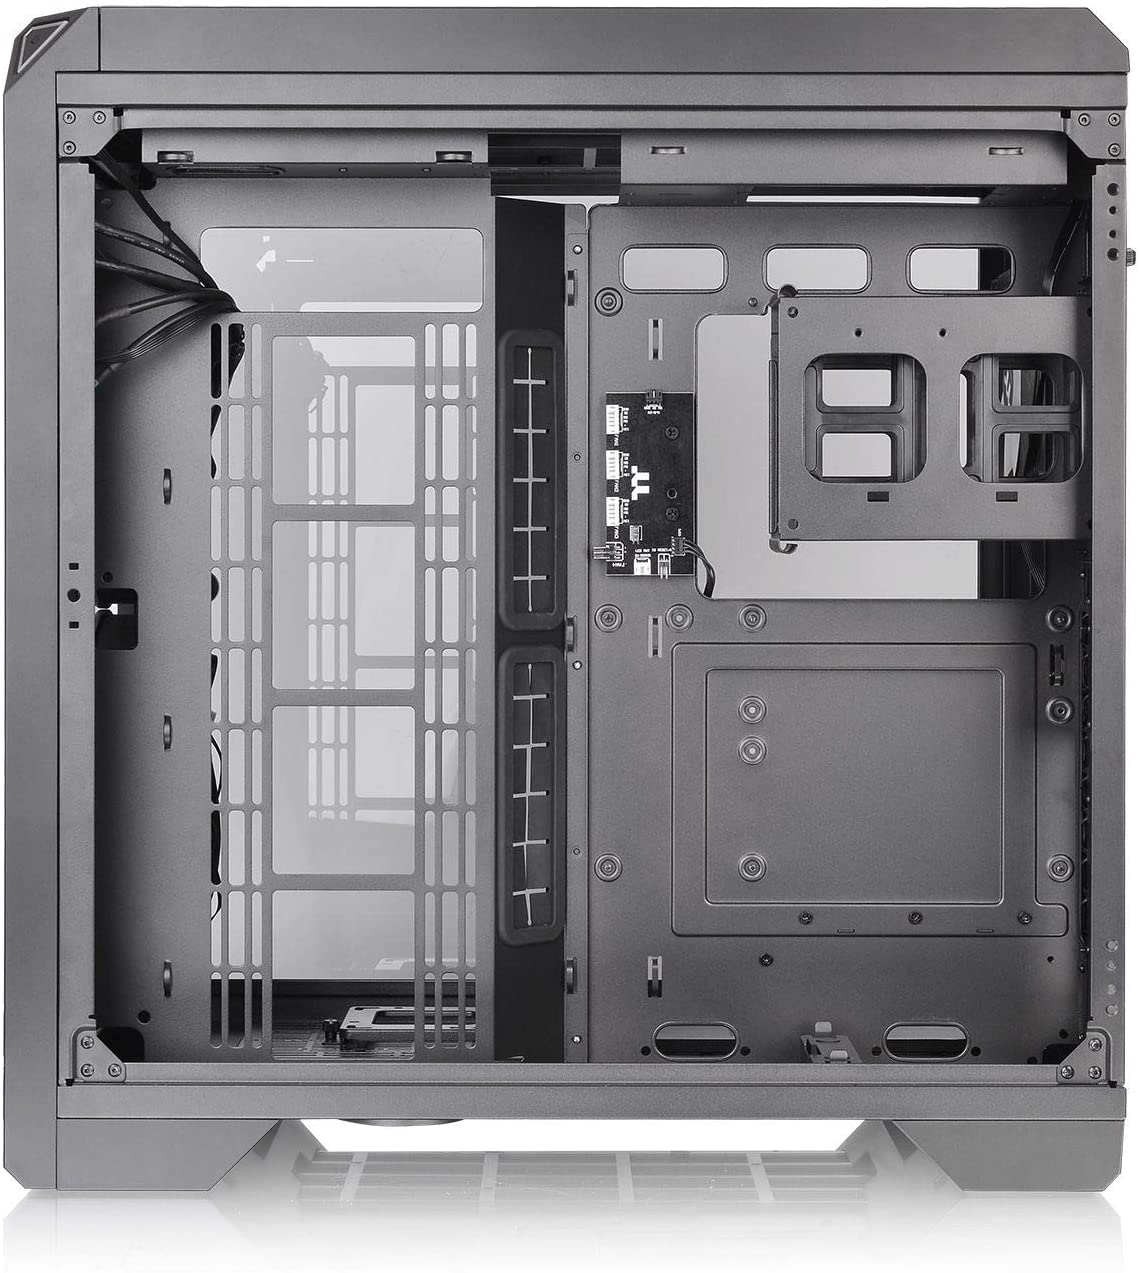 Caixa PC Define C Torre (Preto) - Fractal Design